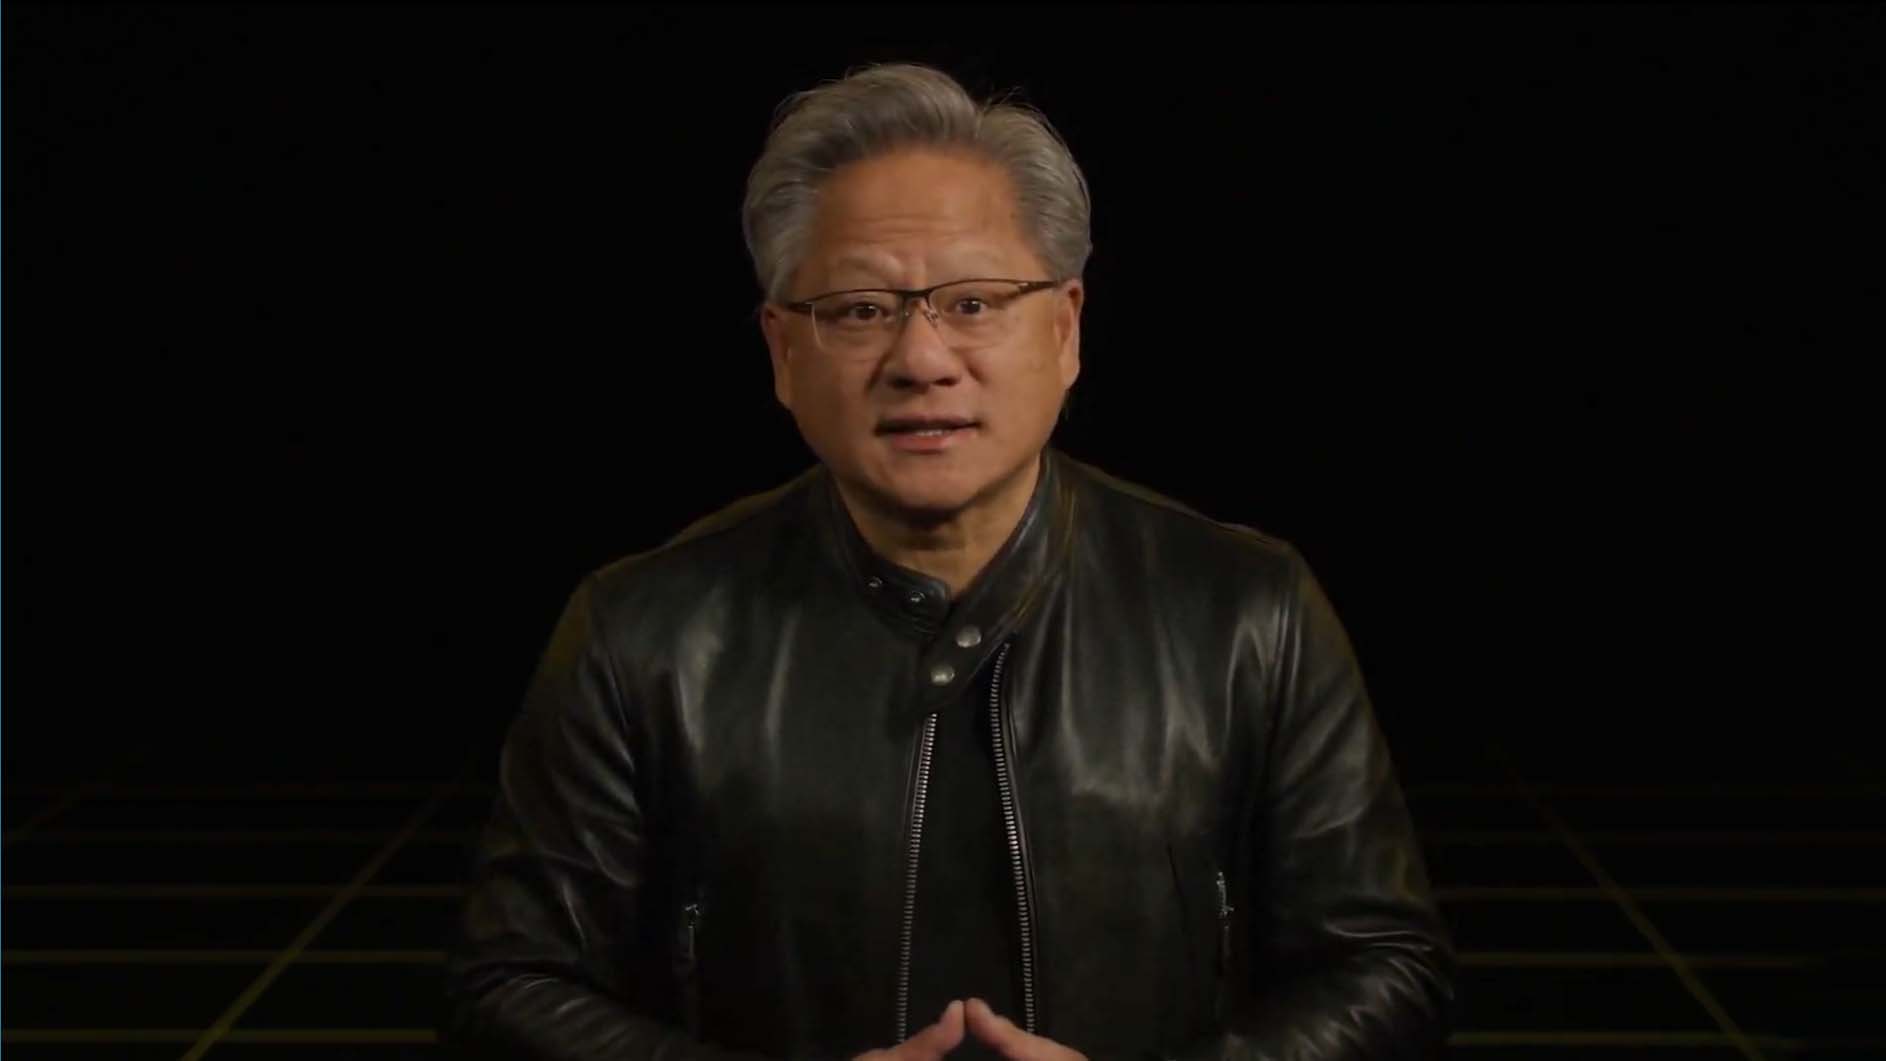 Nvidia CEO Jensen Huang against a black background